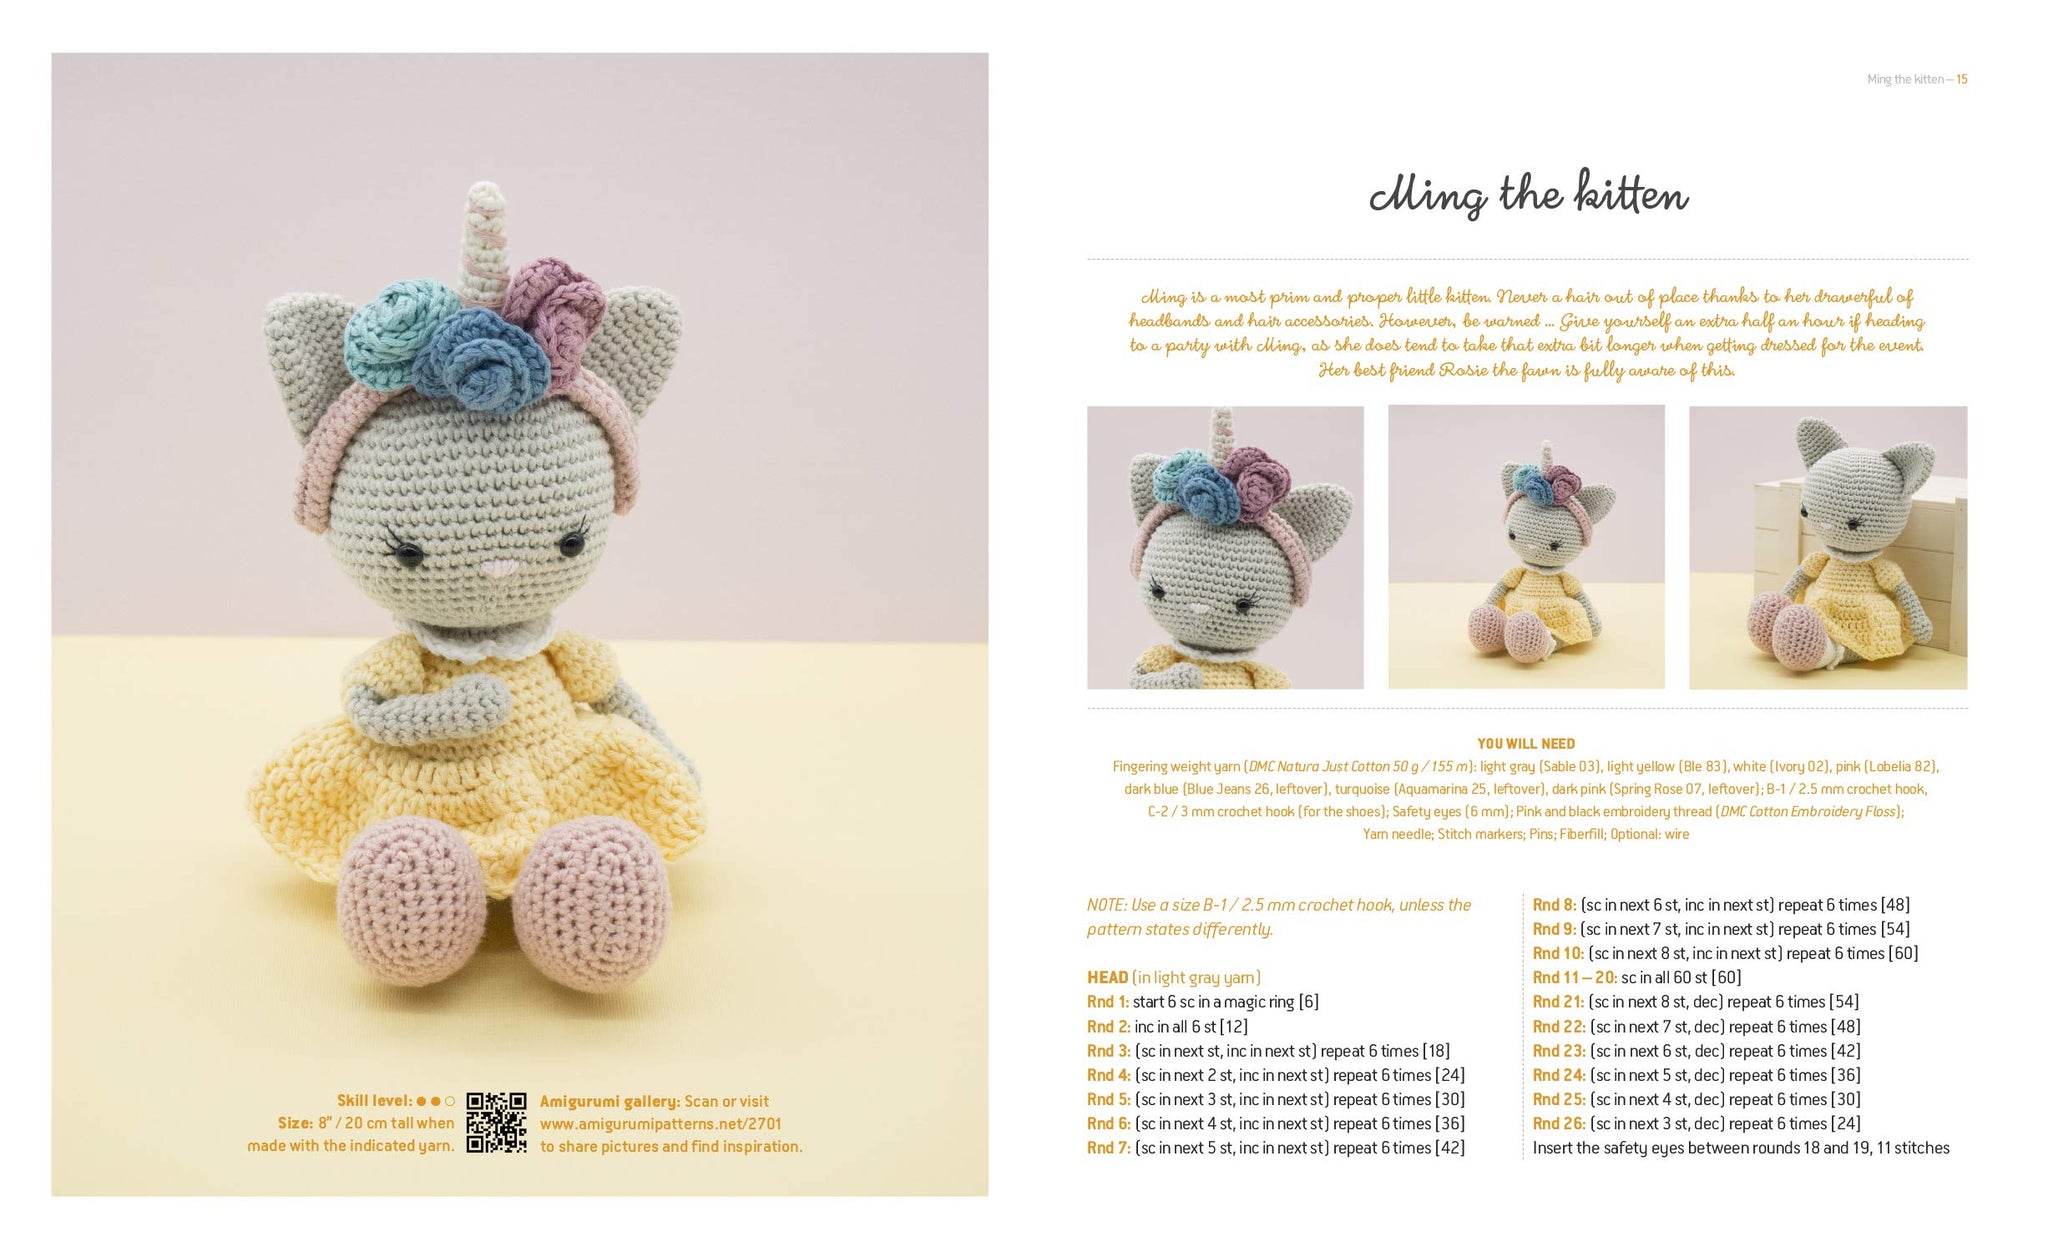 Amigurumi Treasures: 15 Crochet Projects to Cherish [Book]